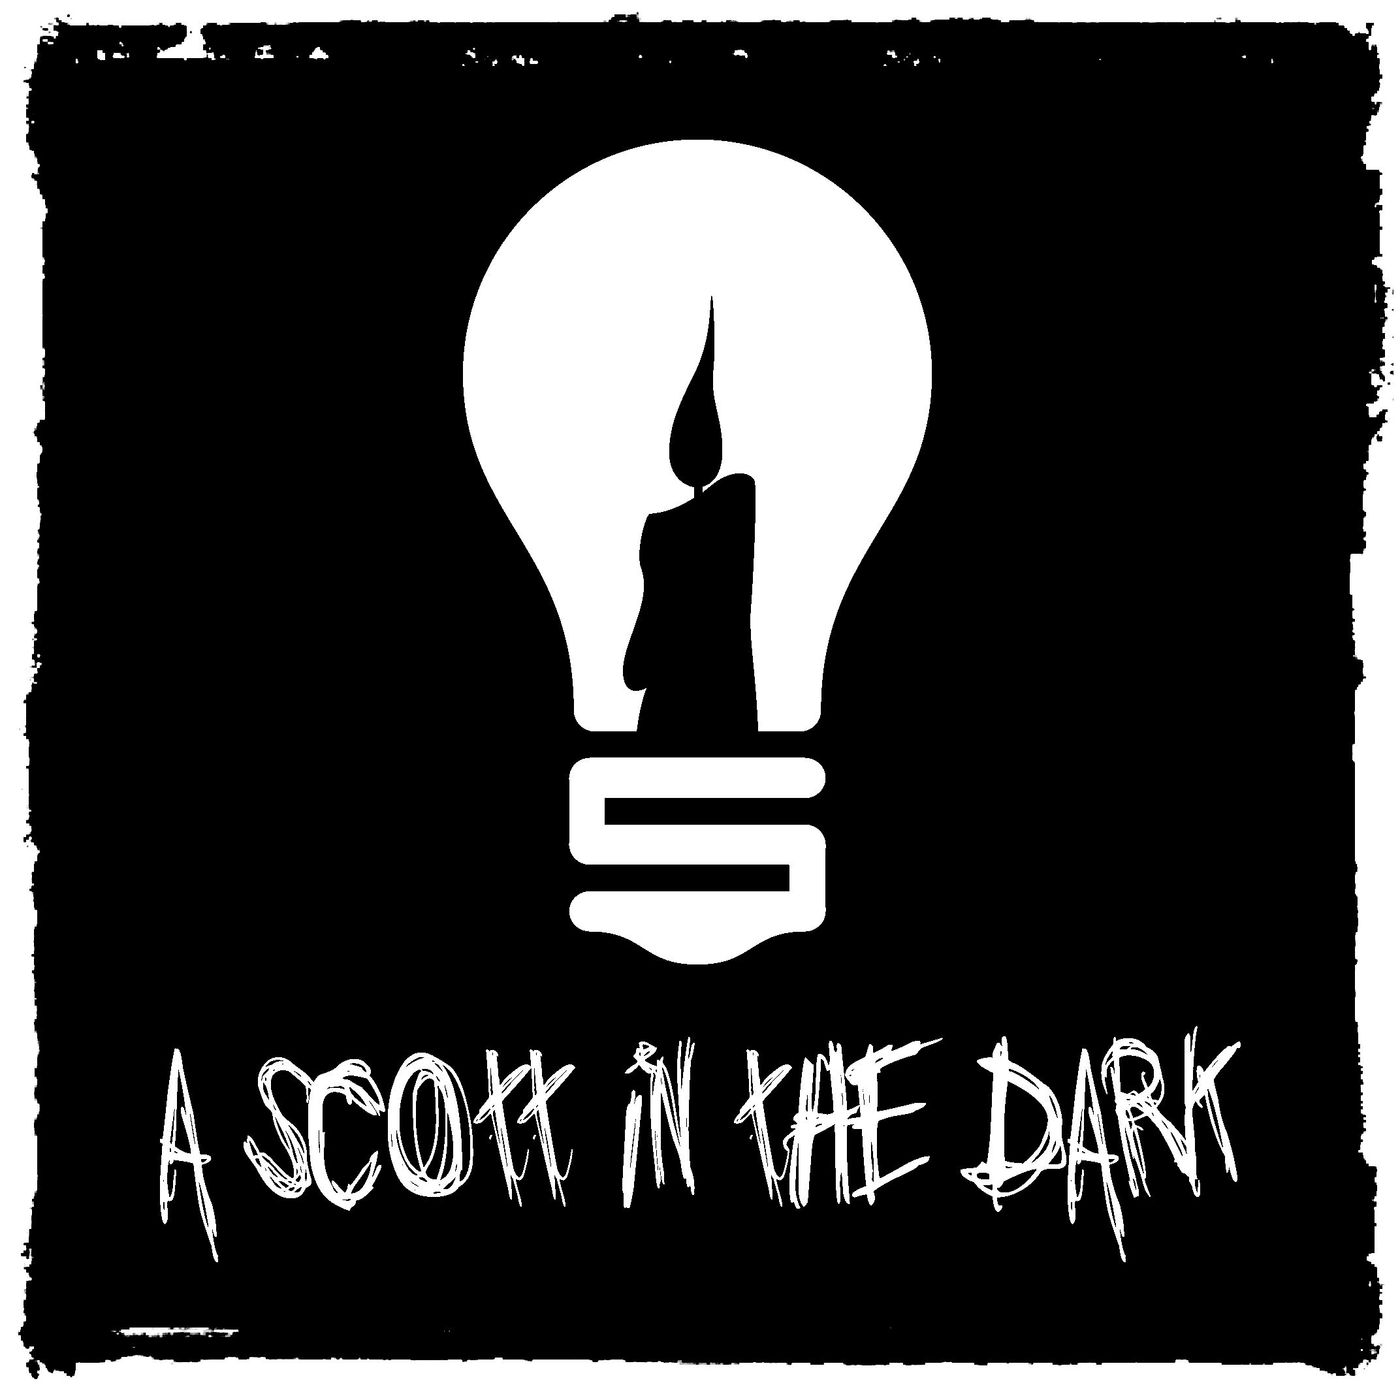 [A Scott in the Dark] Episode 12 Communication